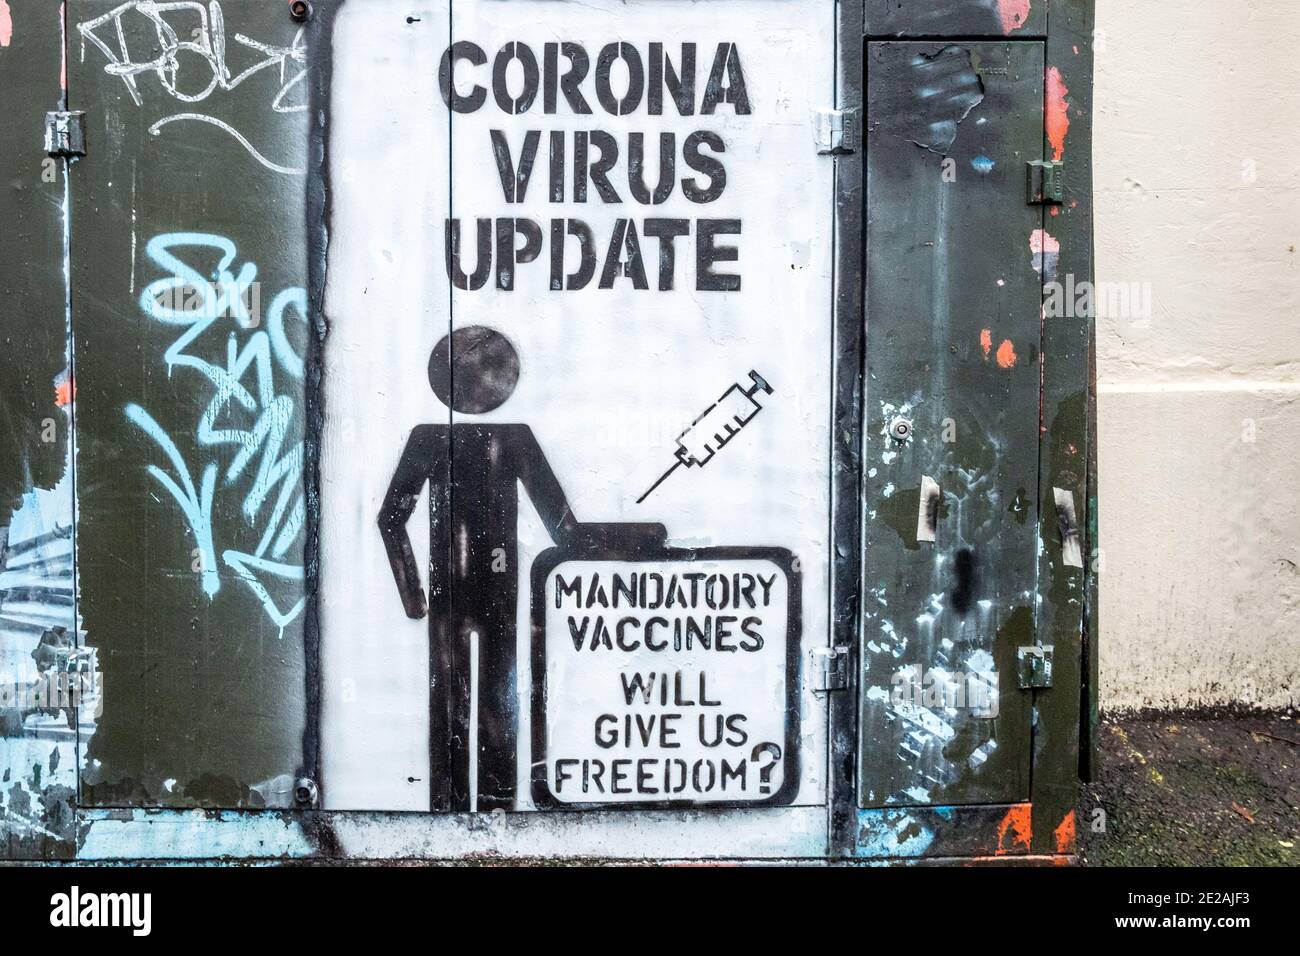 Brighton, 13 janvier 2021: Graffiti anti-vax dans les rues de Brighton ce matin crédit: Andrew Hasson/Alay Live News Banque D'Images